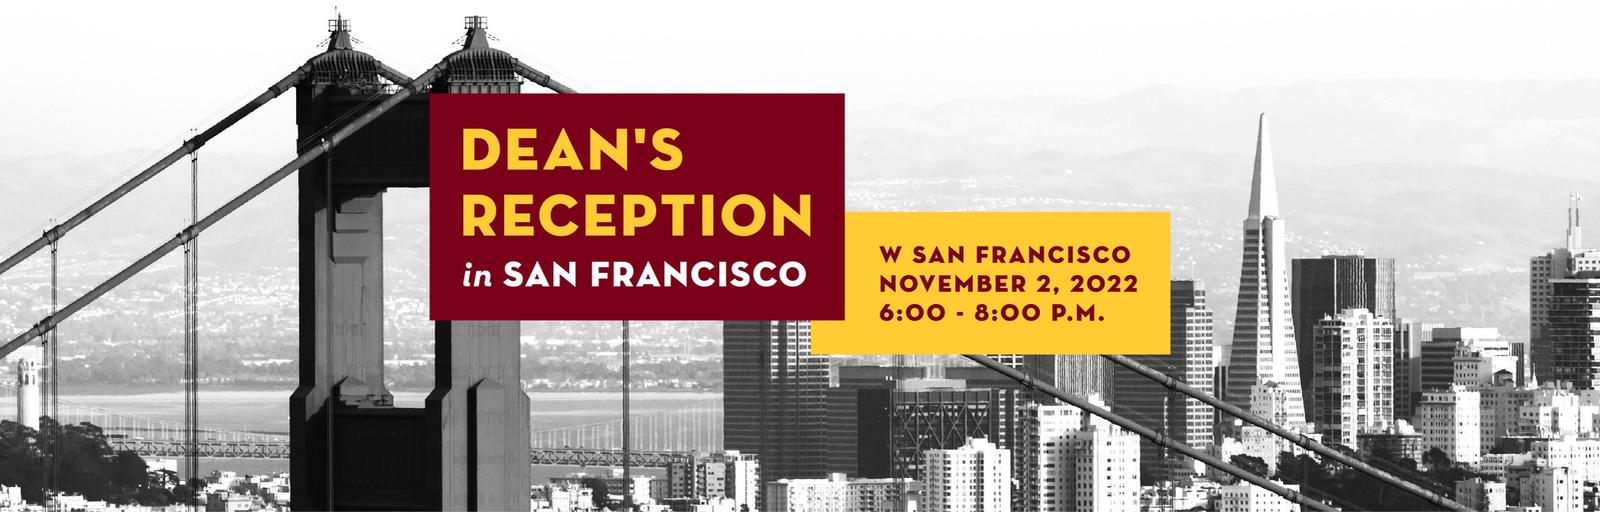 San Francisco Dean's Reception